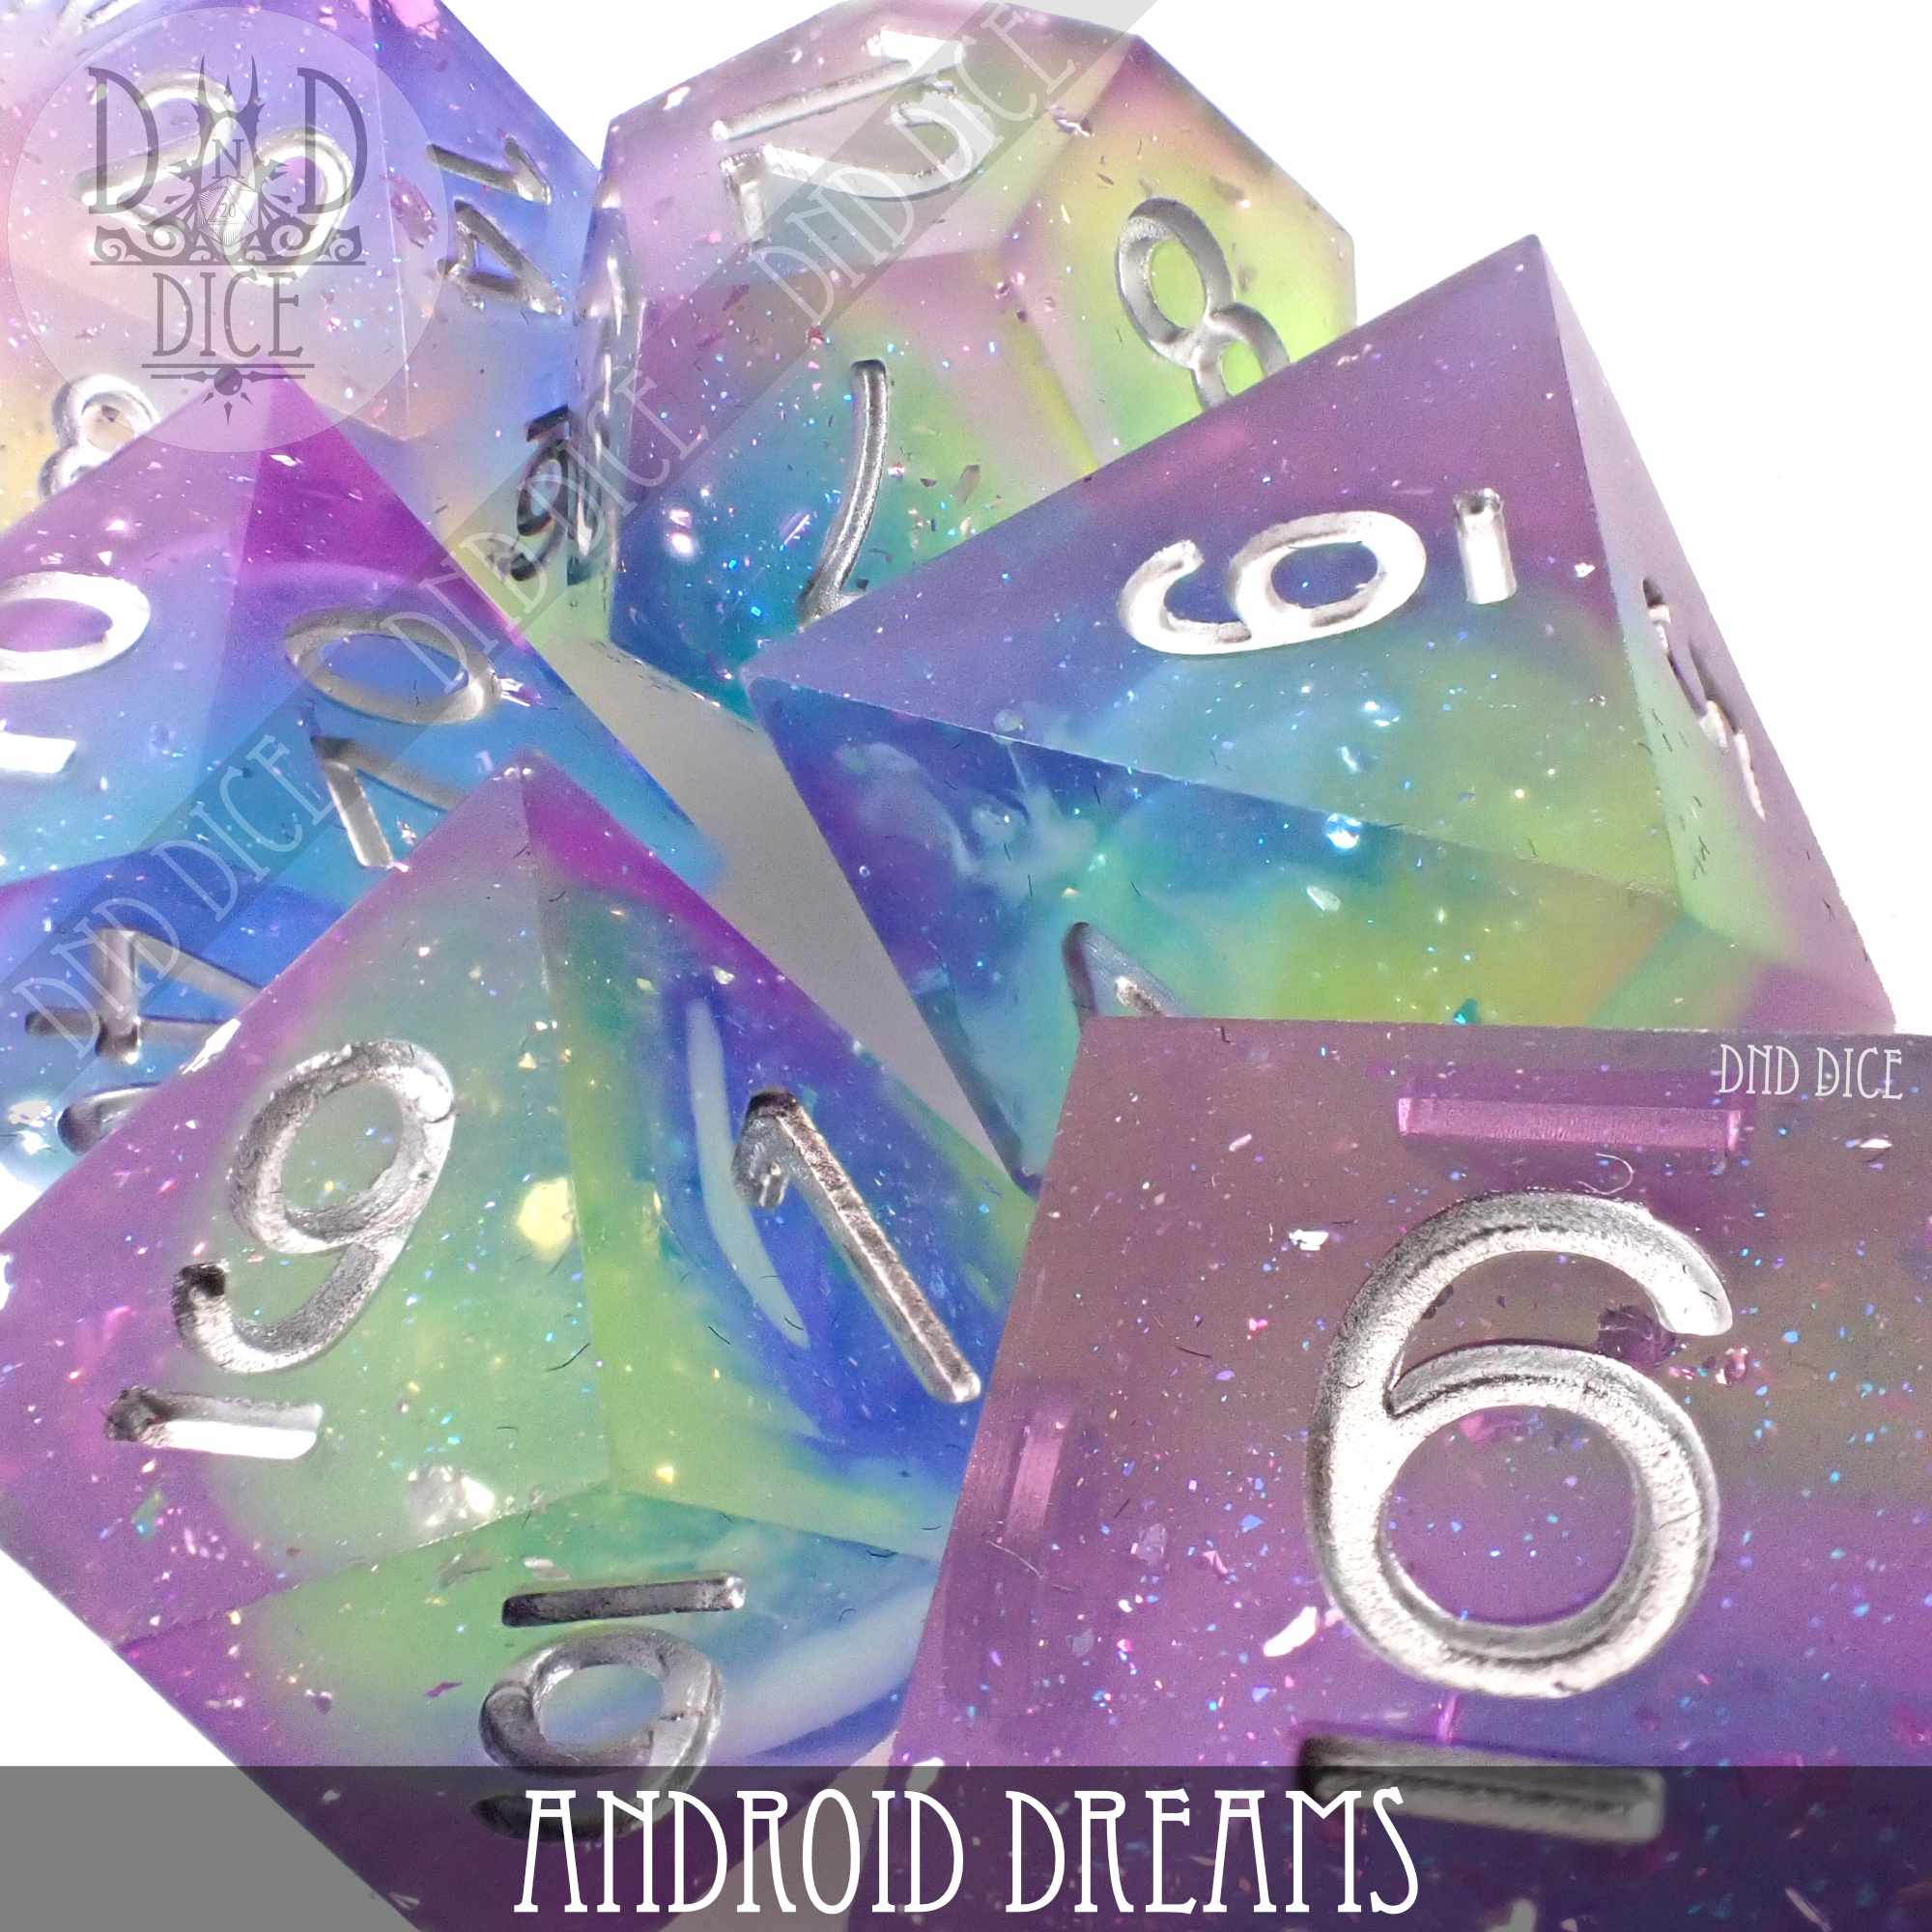 Android Dreams Handmade Dice Set